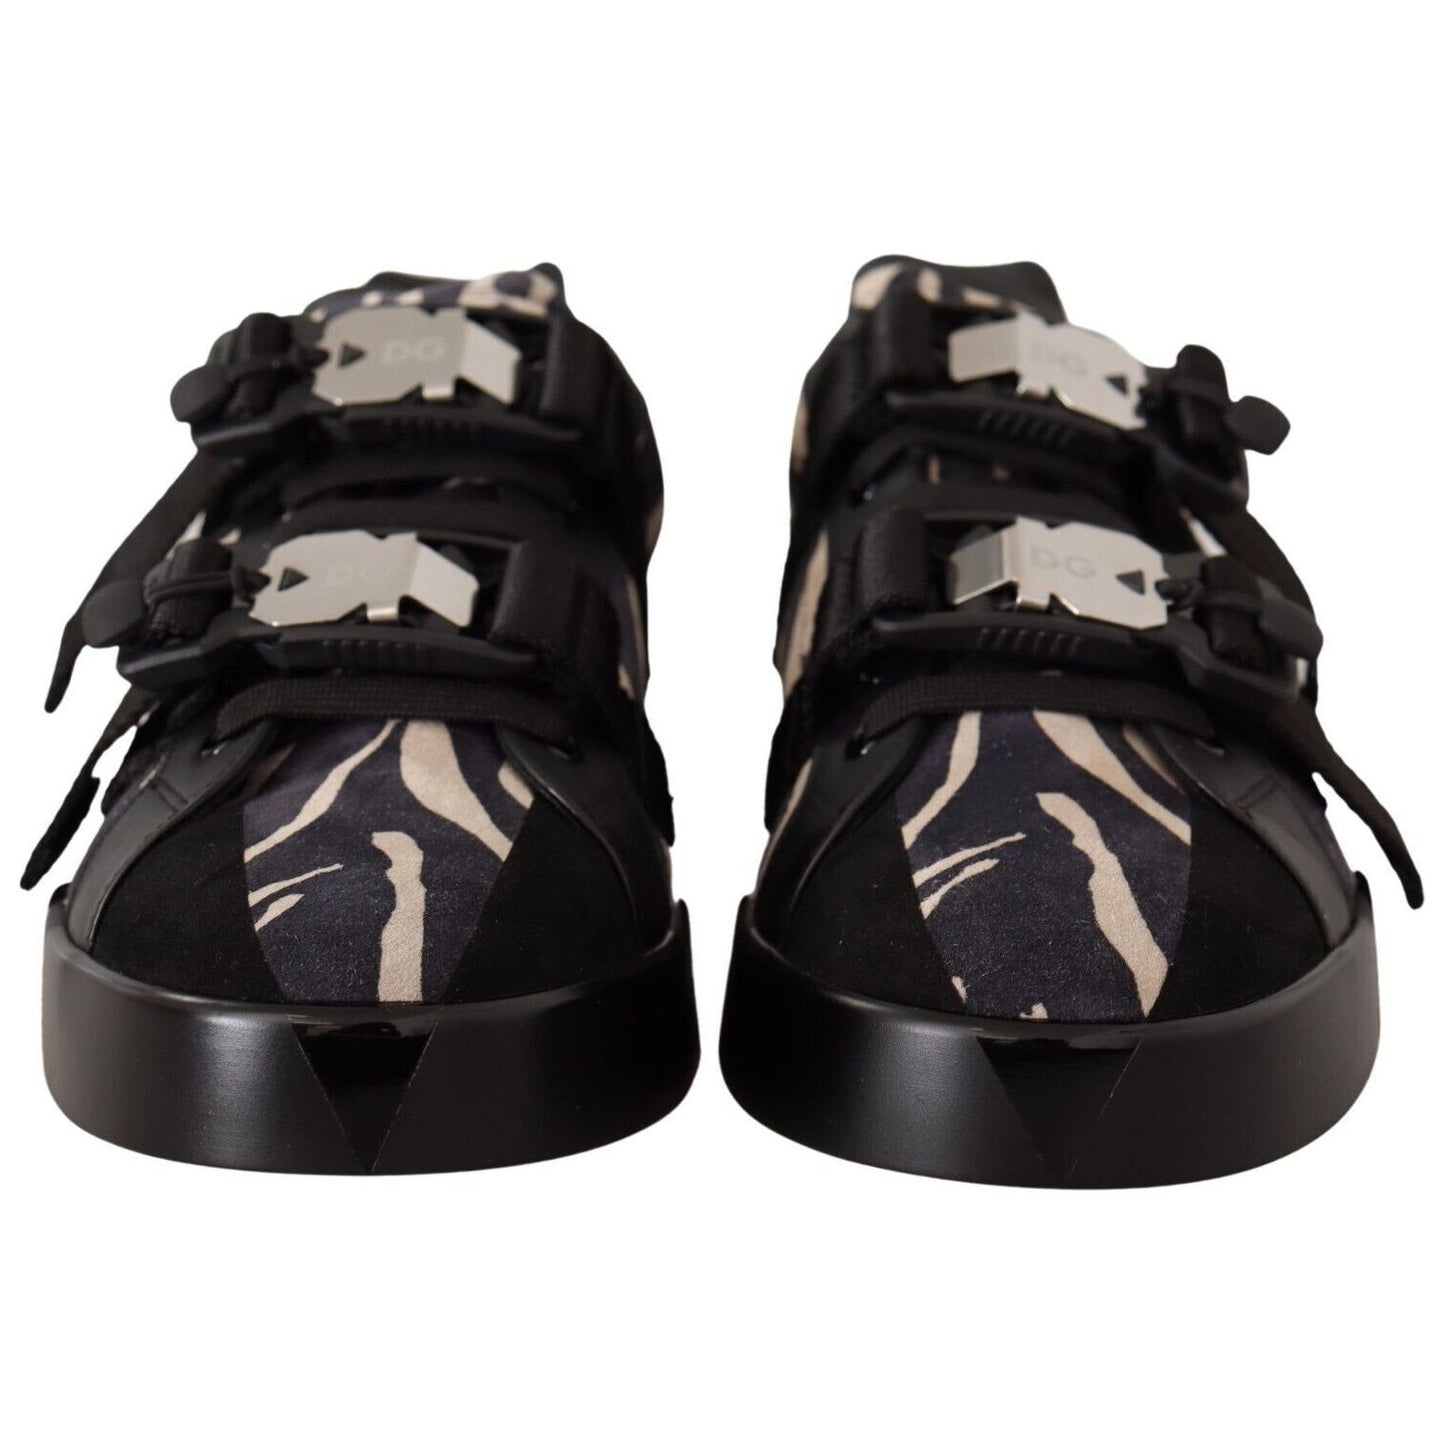 Dolce & Gabbana Zebra Suede Low Top Fashion Sneakers MAN SNEAKERS black-white-zebra-suede-rubber-sneakers-shoes-2 s-l1600-6-10-ec458309-128.jpg